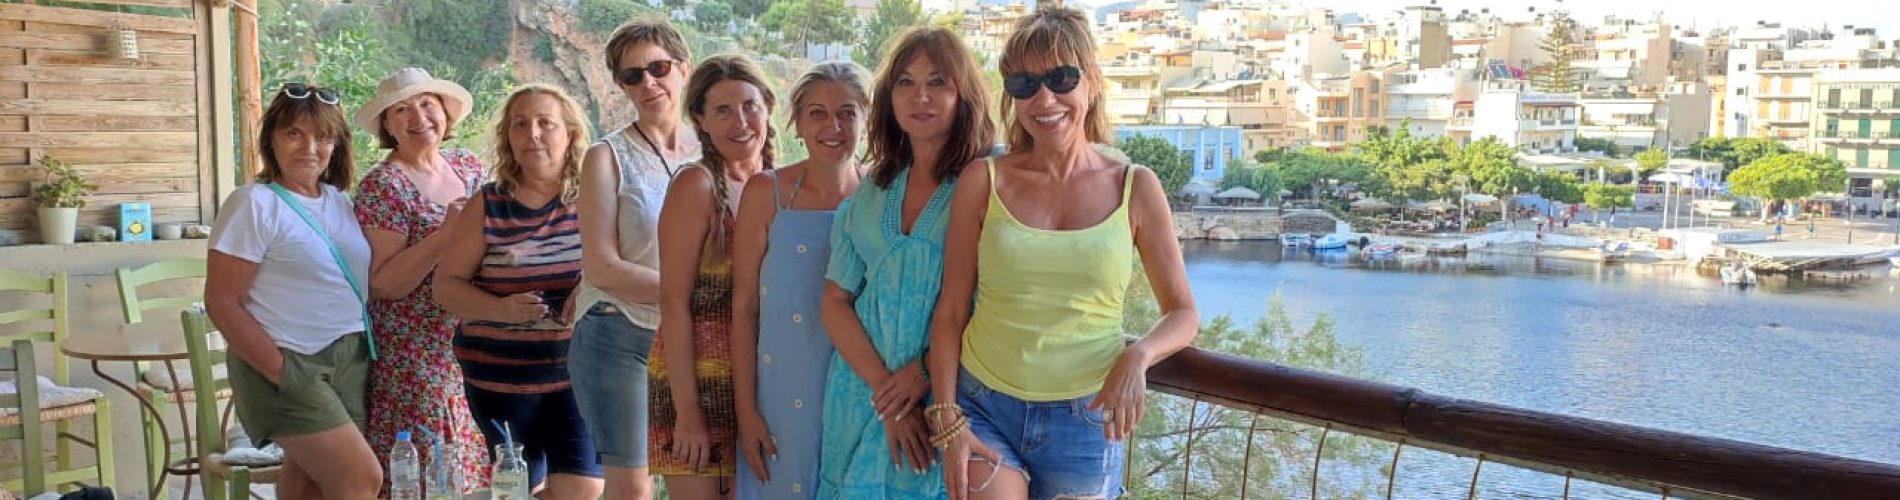 Creta, Isla, grupo mujeres